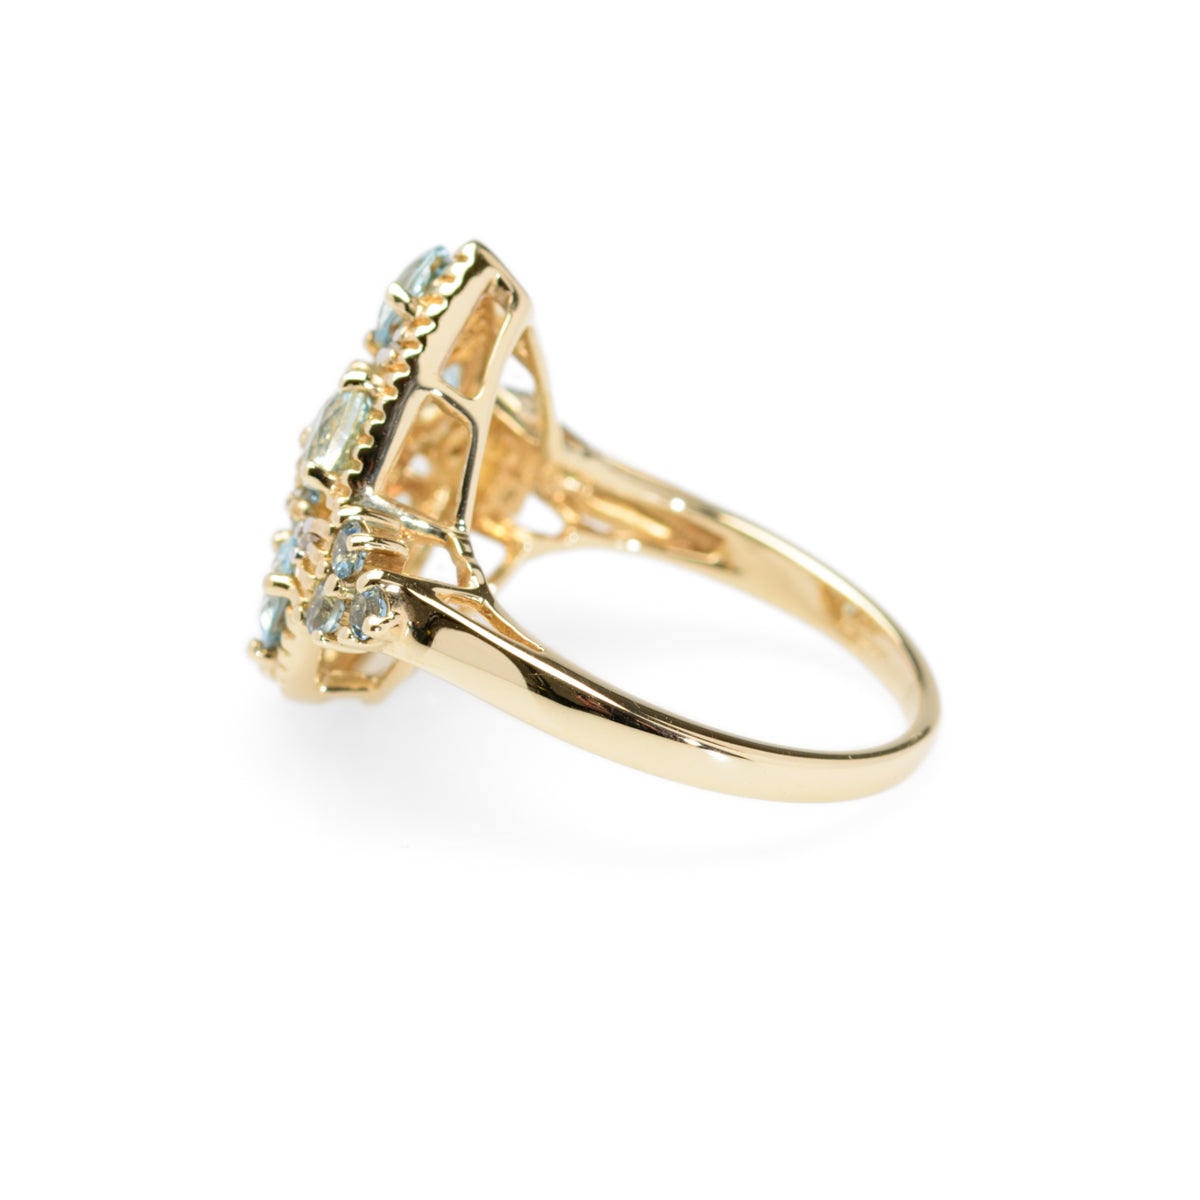 9ct Gold Cocktail Ring With Aquamarines & Diamonds In Teardrop Mount Birmingham Hallmark 2008 (Code A956)